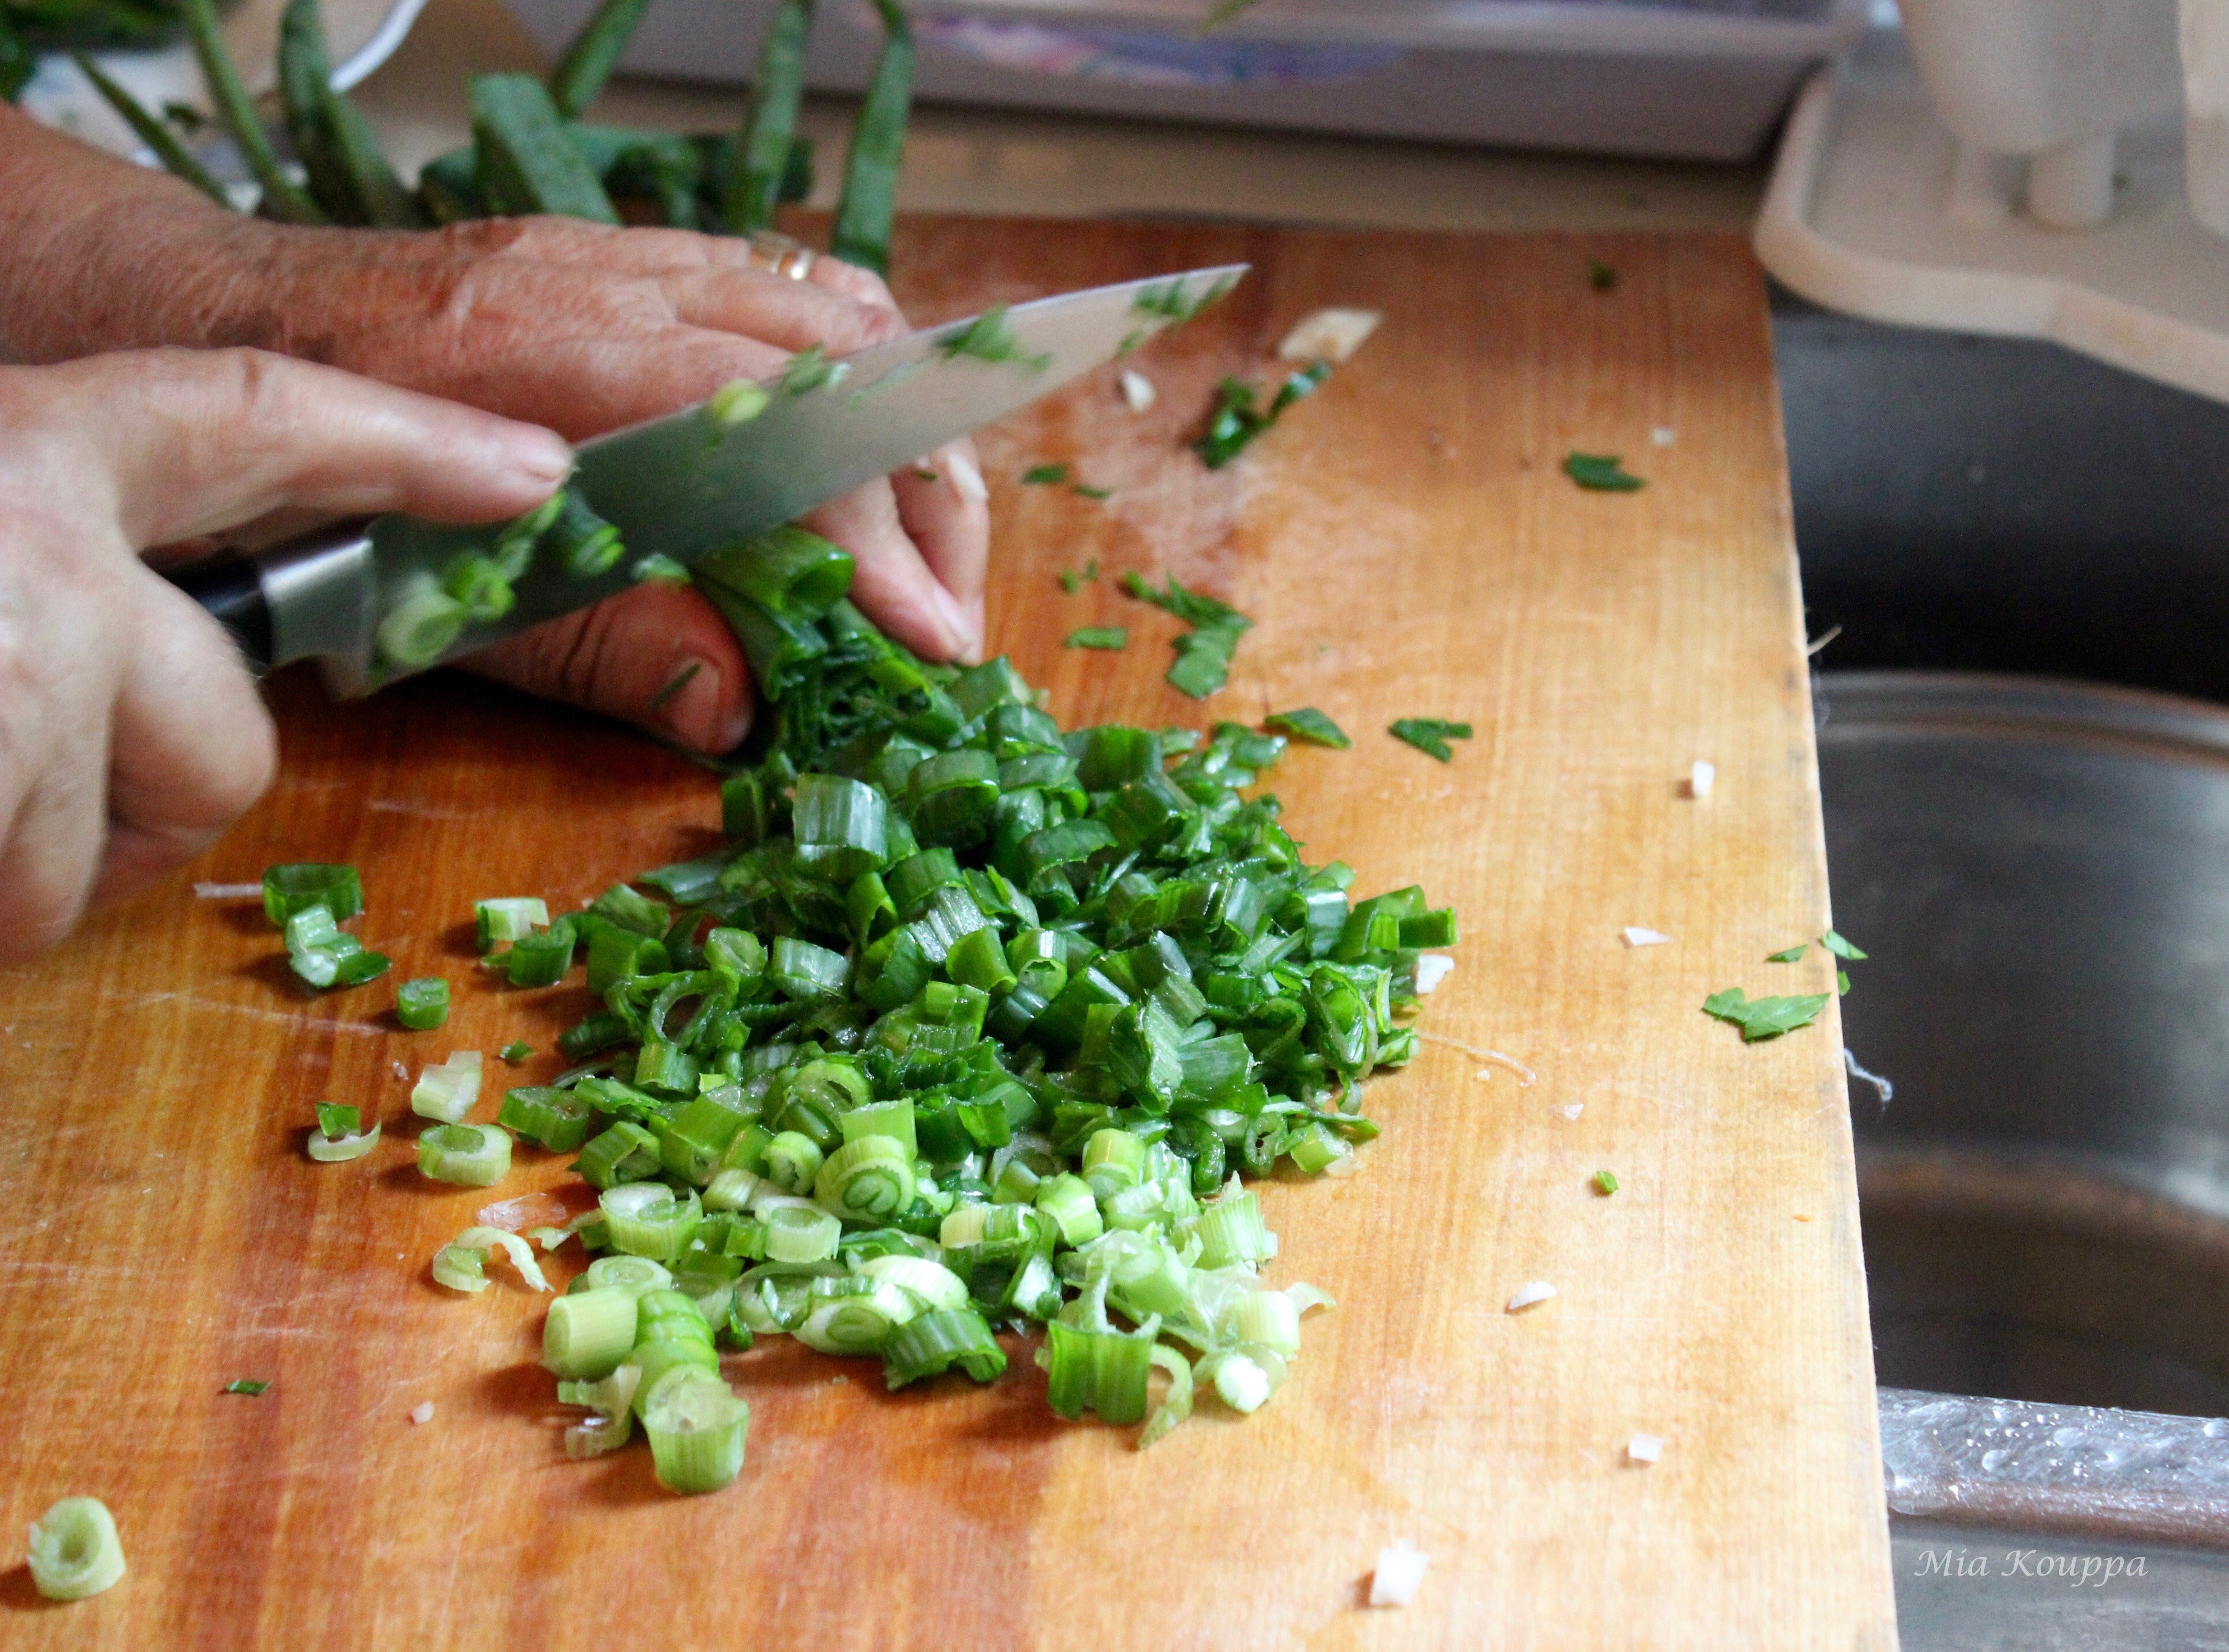 Chopping fresh green onions